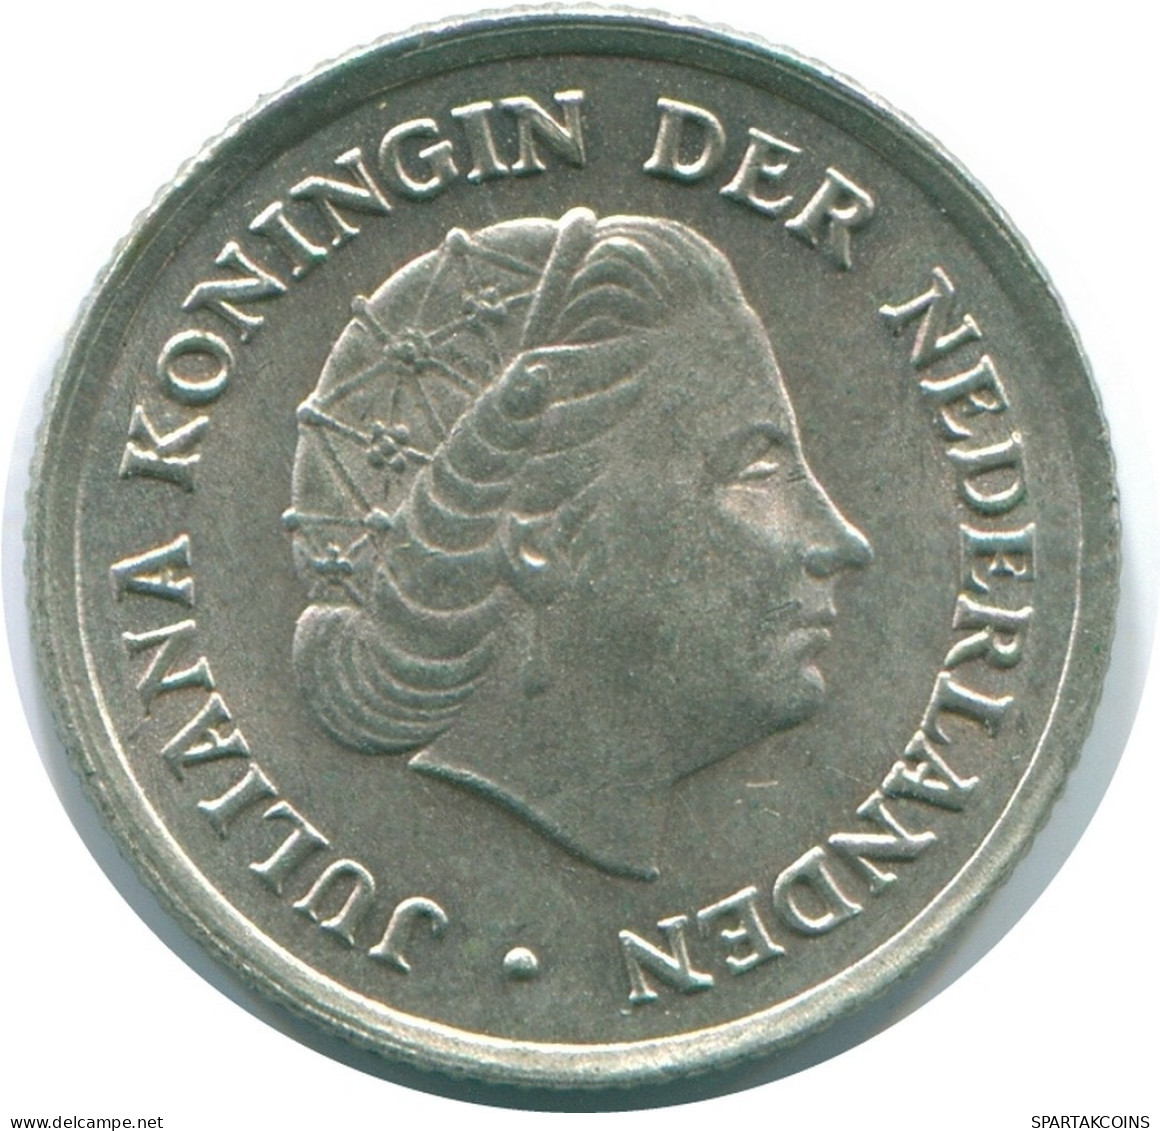 1/10 GULDEN 1970 NIEDERLÄNDISCHE ANTILLEN SILBER Koloniale Münze #NL12994.3.D.A - Netherlands Antilles